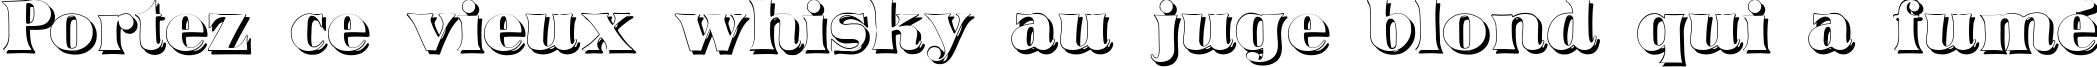 Пример написания шрифтом Domino Shadow текста на французском